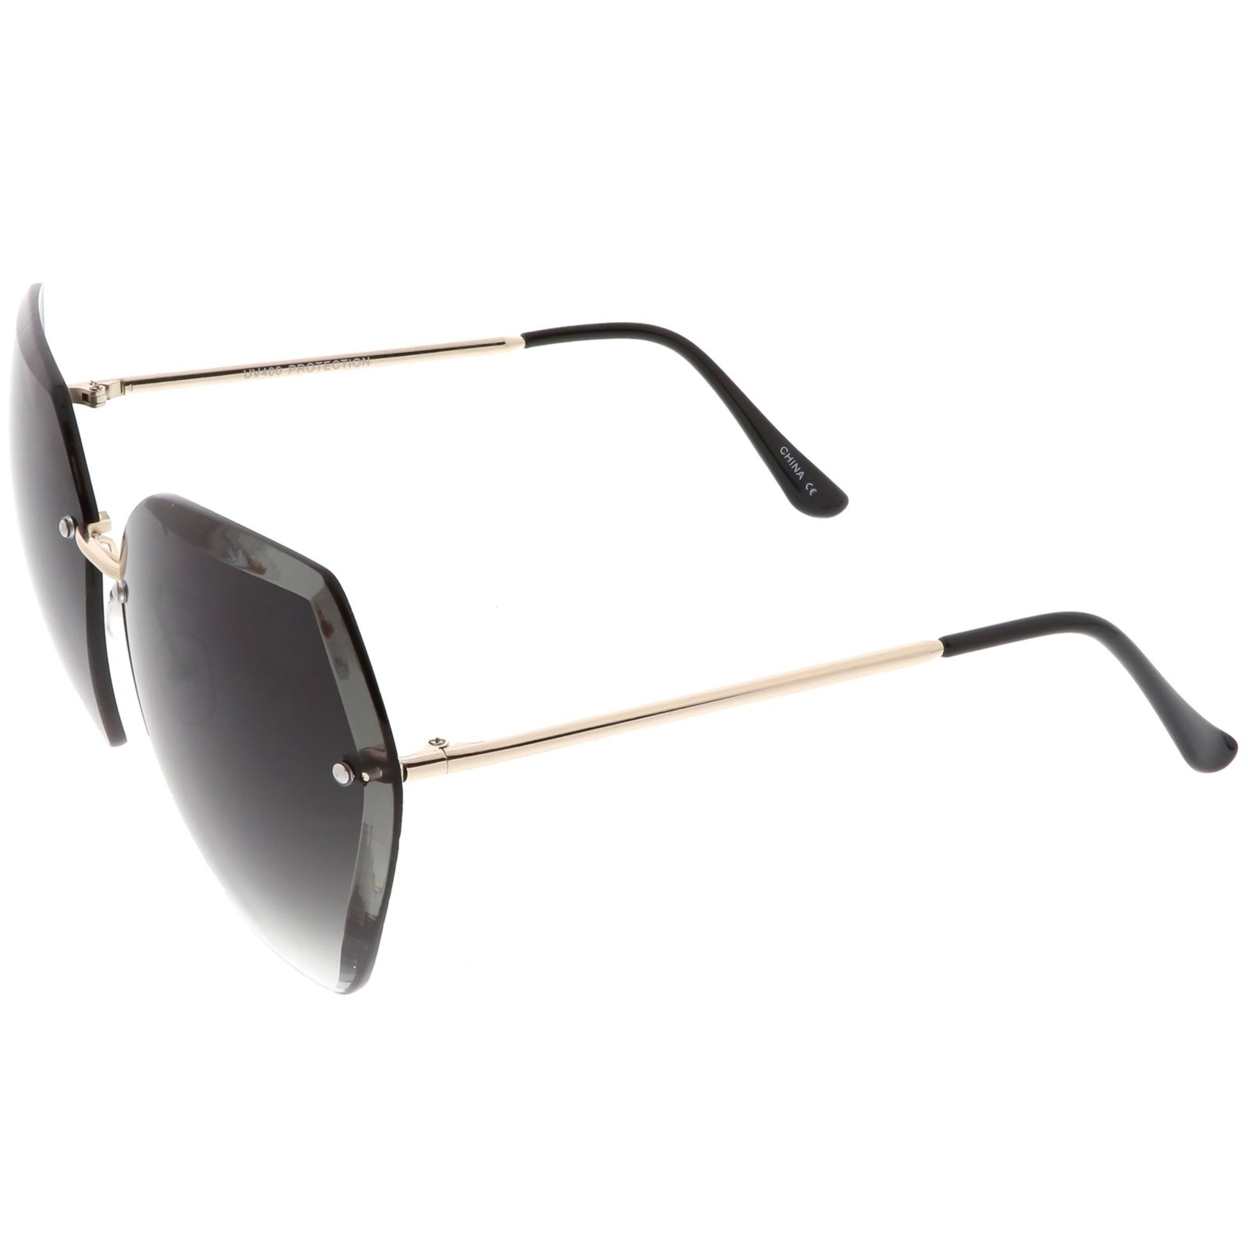 Oversize Rimless Geometric Sunglasses Beveled Gradient Lens 70mm - Silver / Grey Gradient